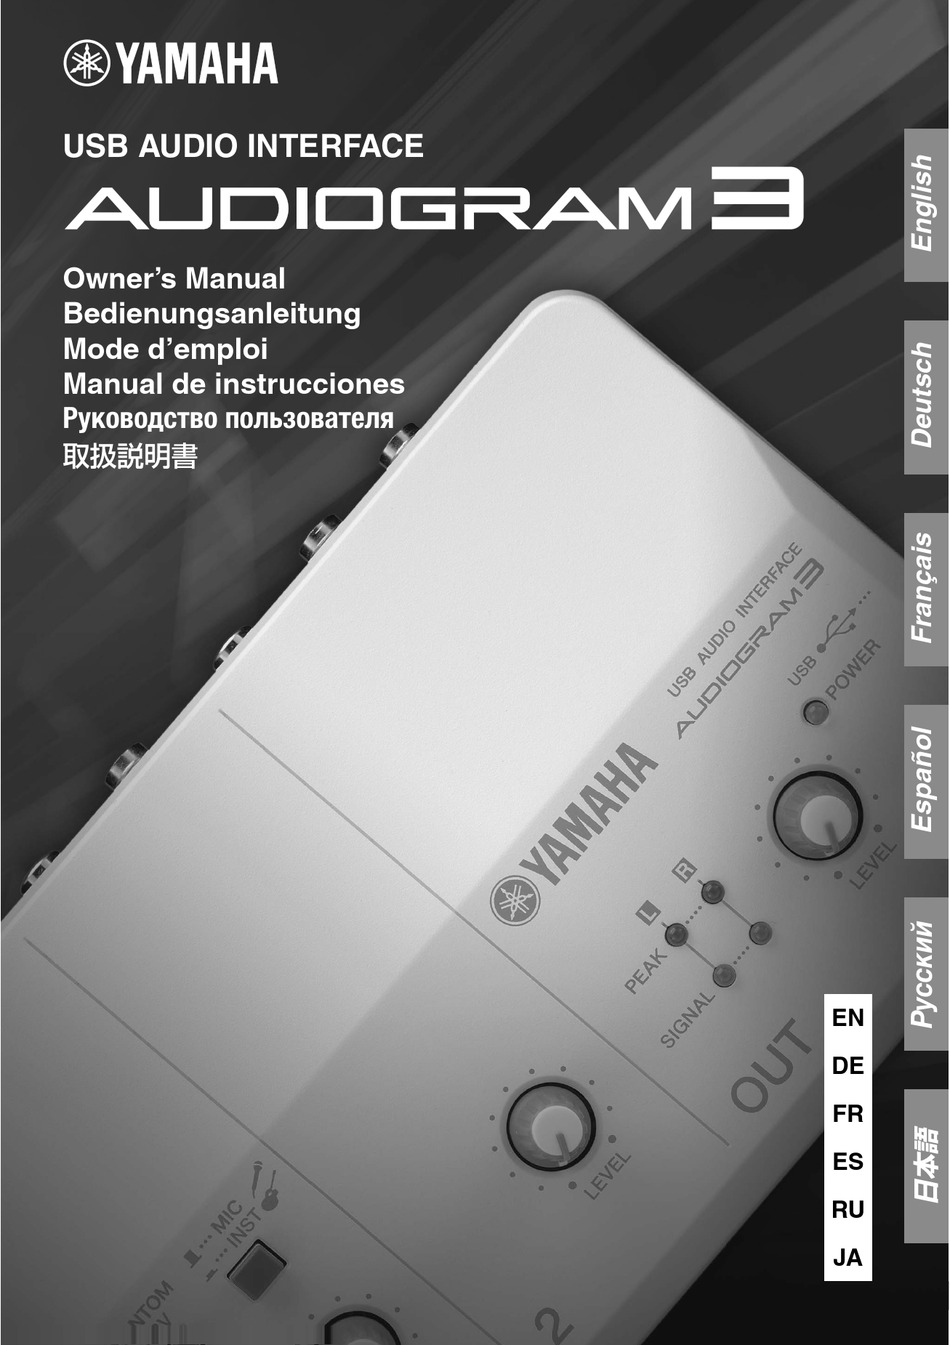 YAMAHA AUDIOGRAM3 OWNER'S MANUAL Pdf Download | ManualsLib